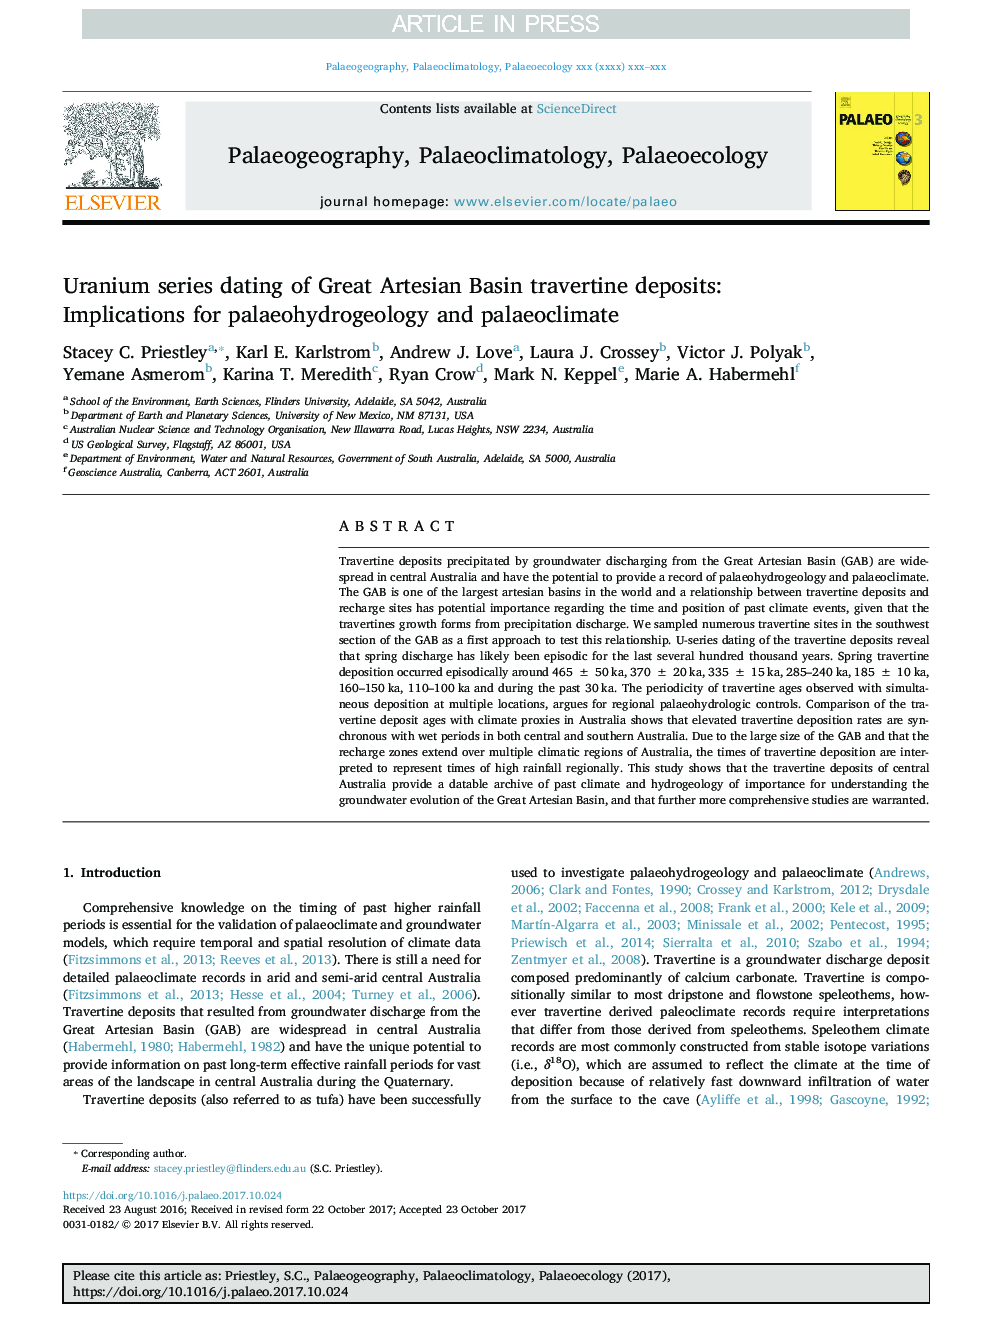 Uranium series dating of Great Artesian Basin travertine deposits: Implications for palaeohydrogeology and palaeoclimate